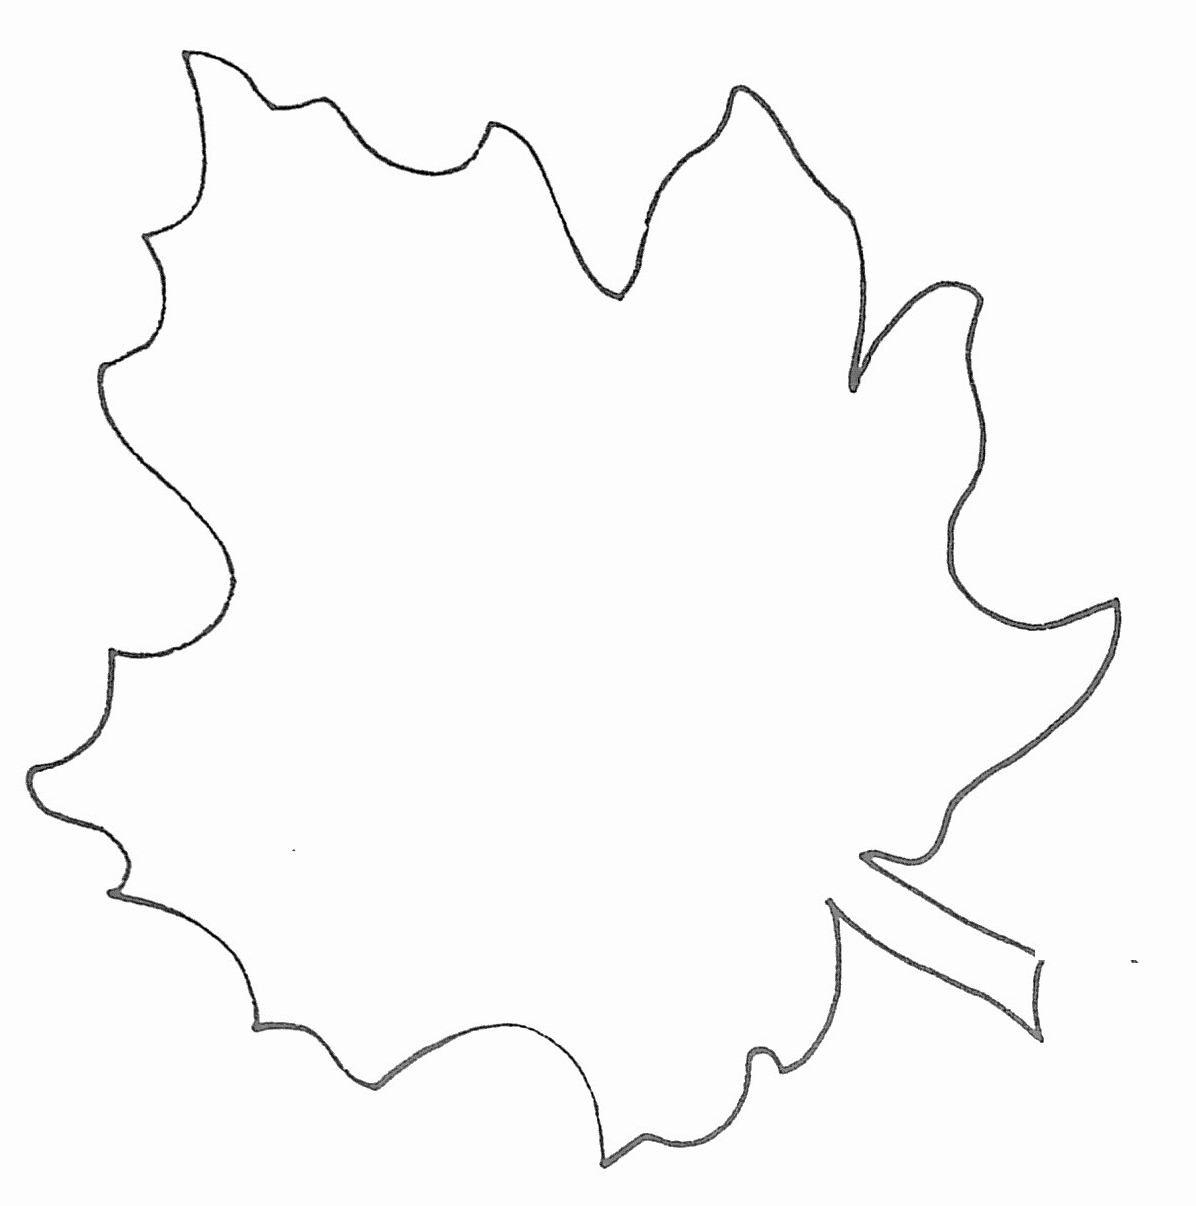 Free Printable Leaf Template | Mathosproject - Free Printable Leaf Template